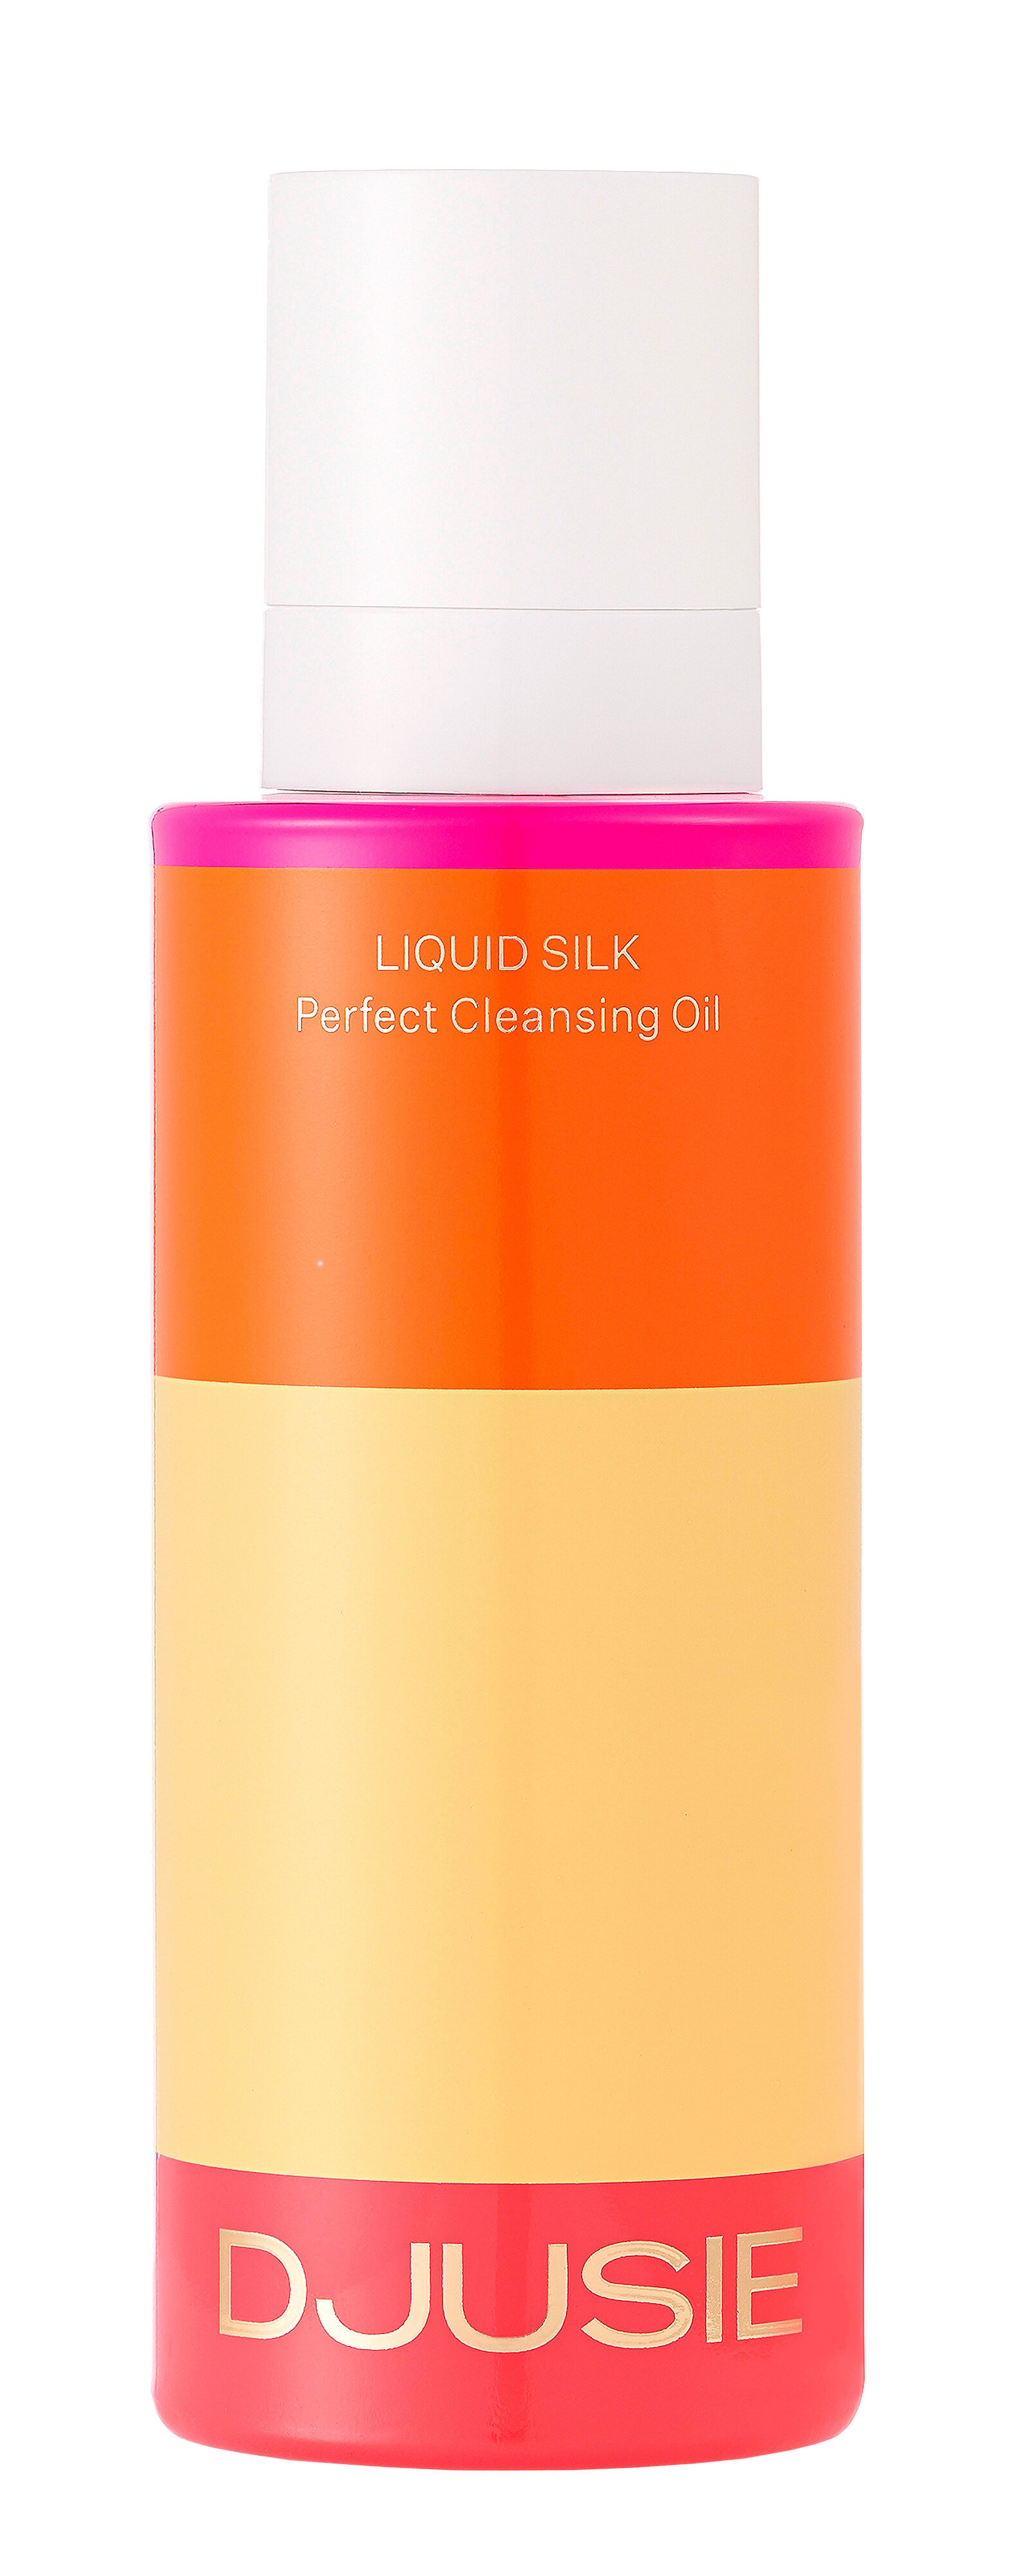 Liquid Silk Perfect Cleansing Oil